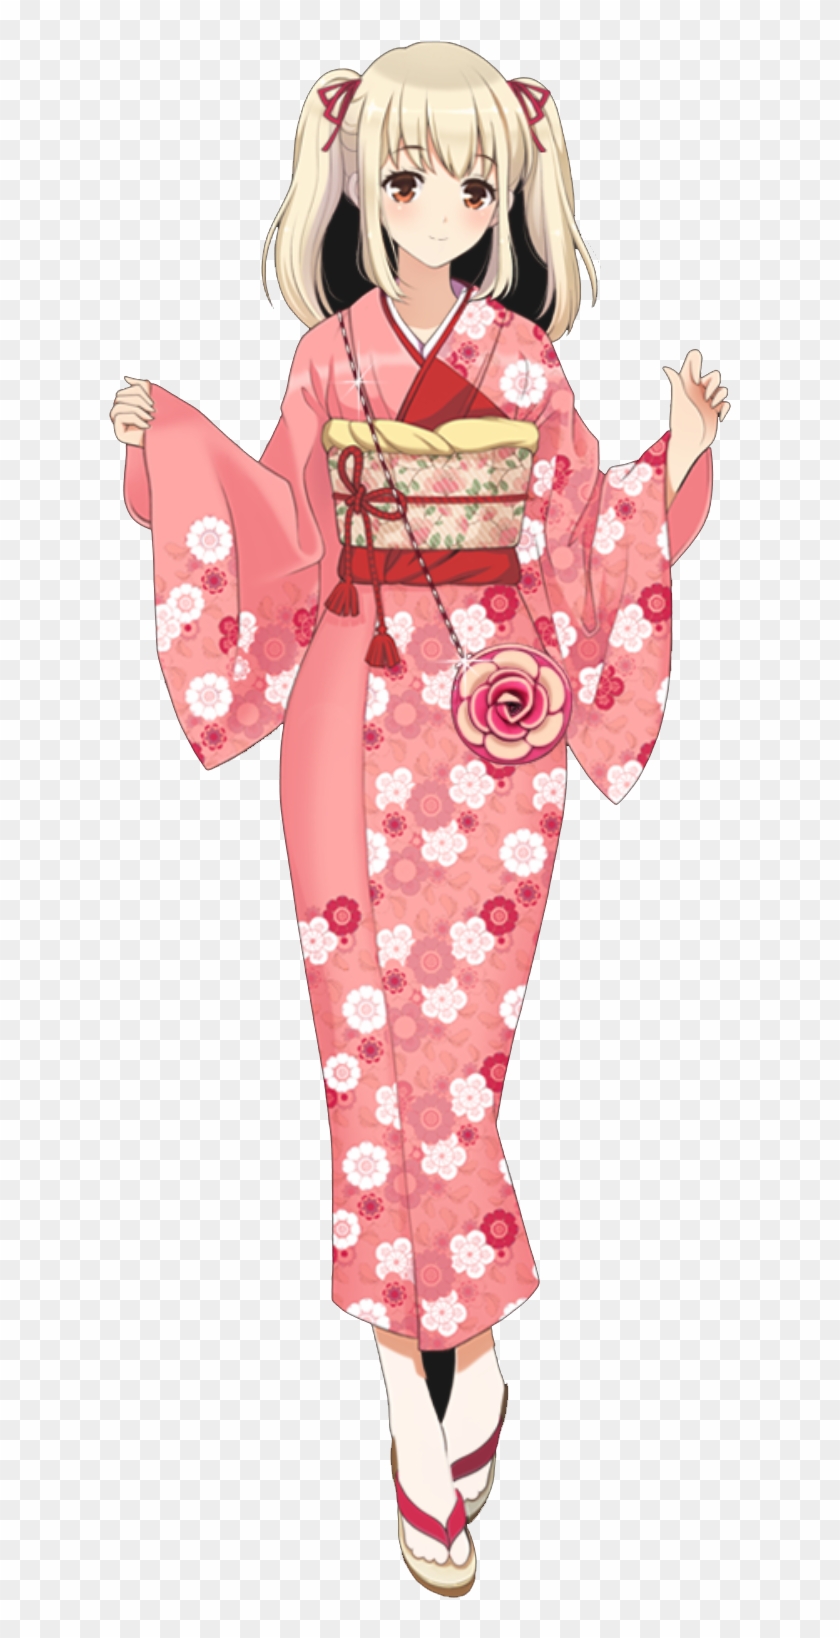 Cute anime geisha girl in kimono Royalty Free Vector Image